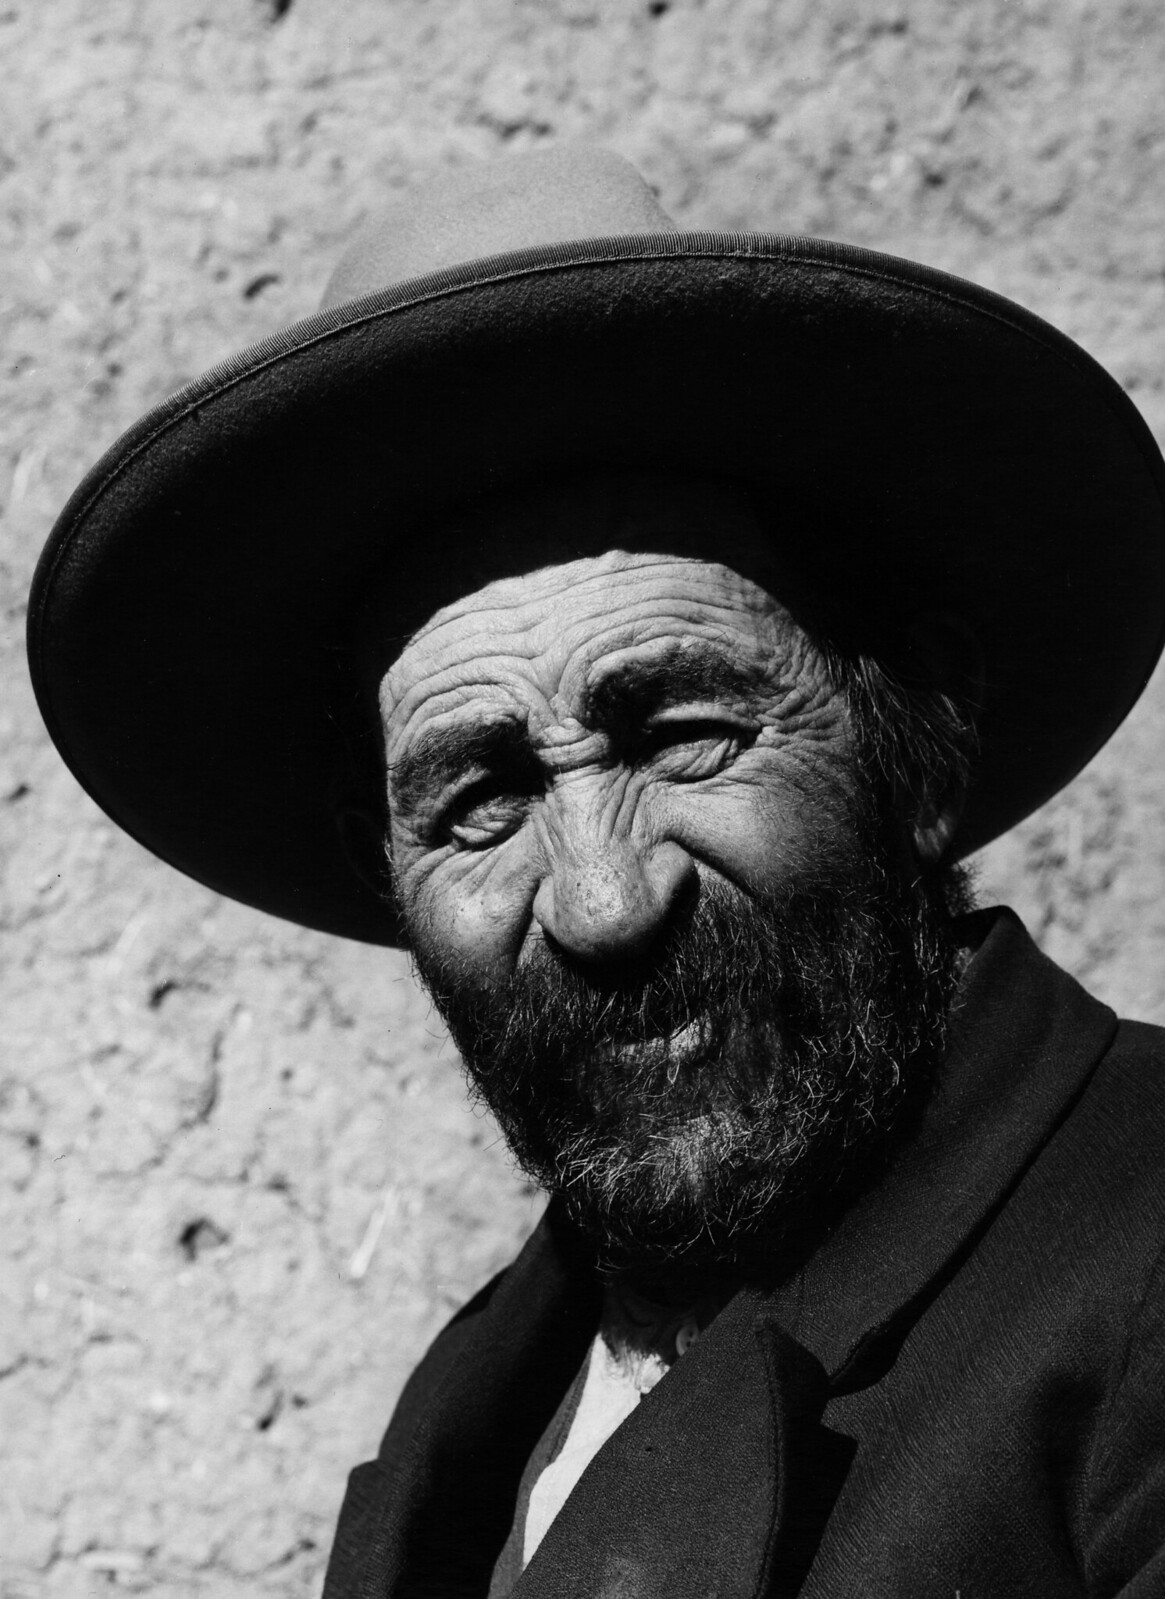 A Hispanic rancher